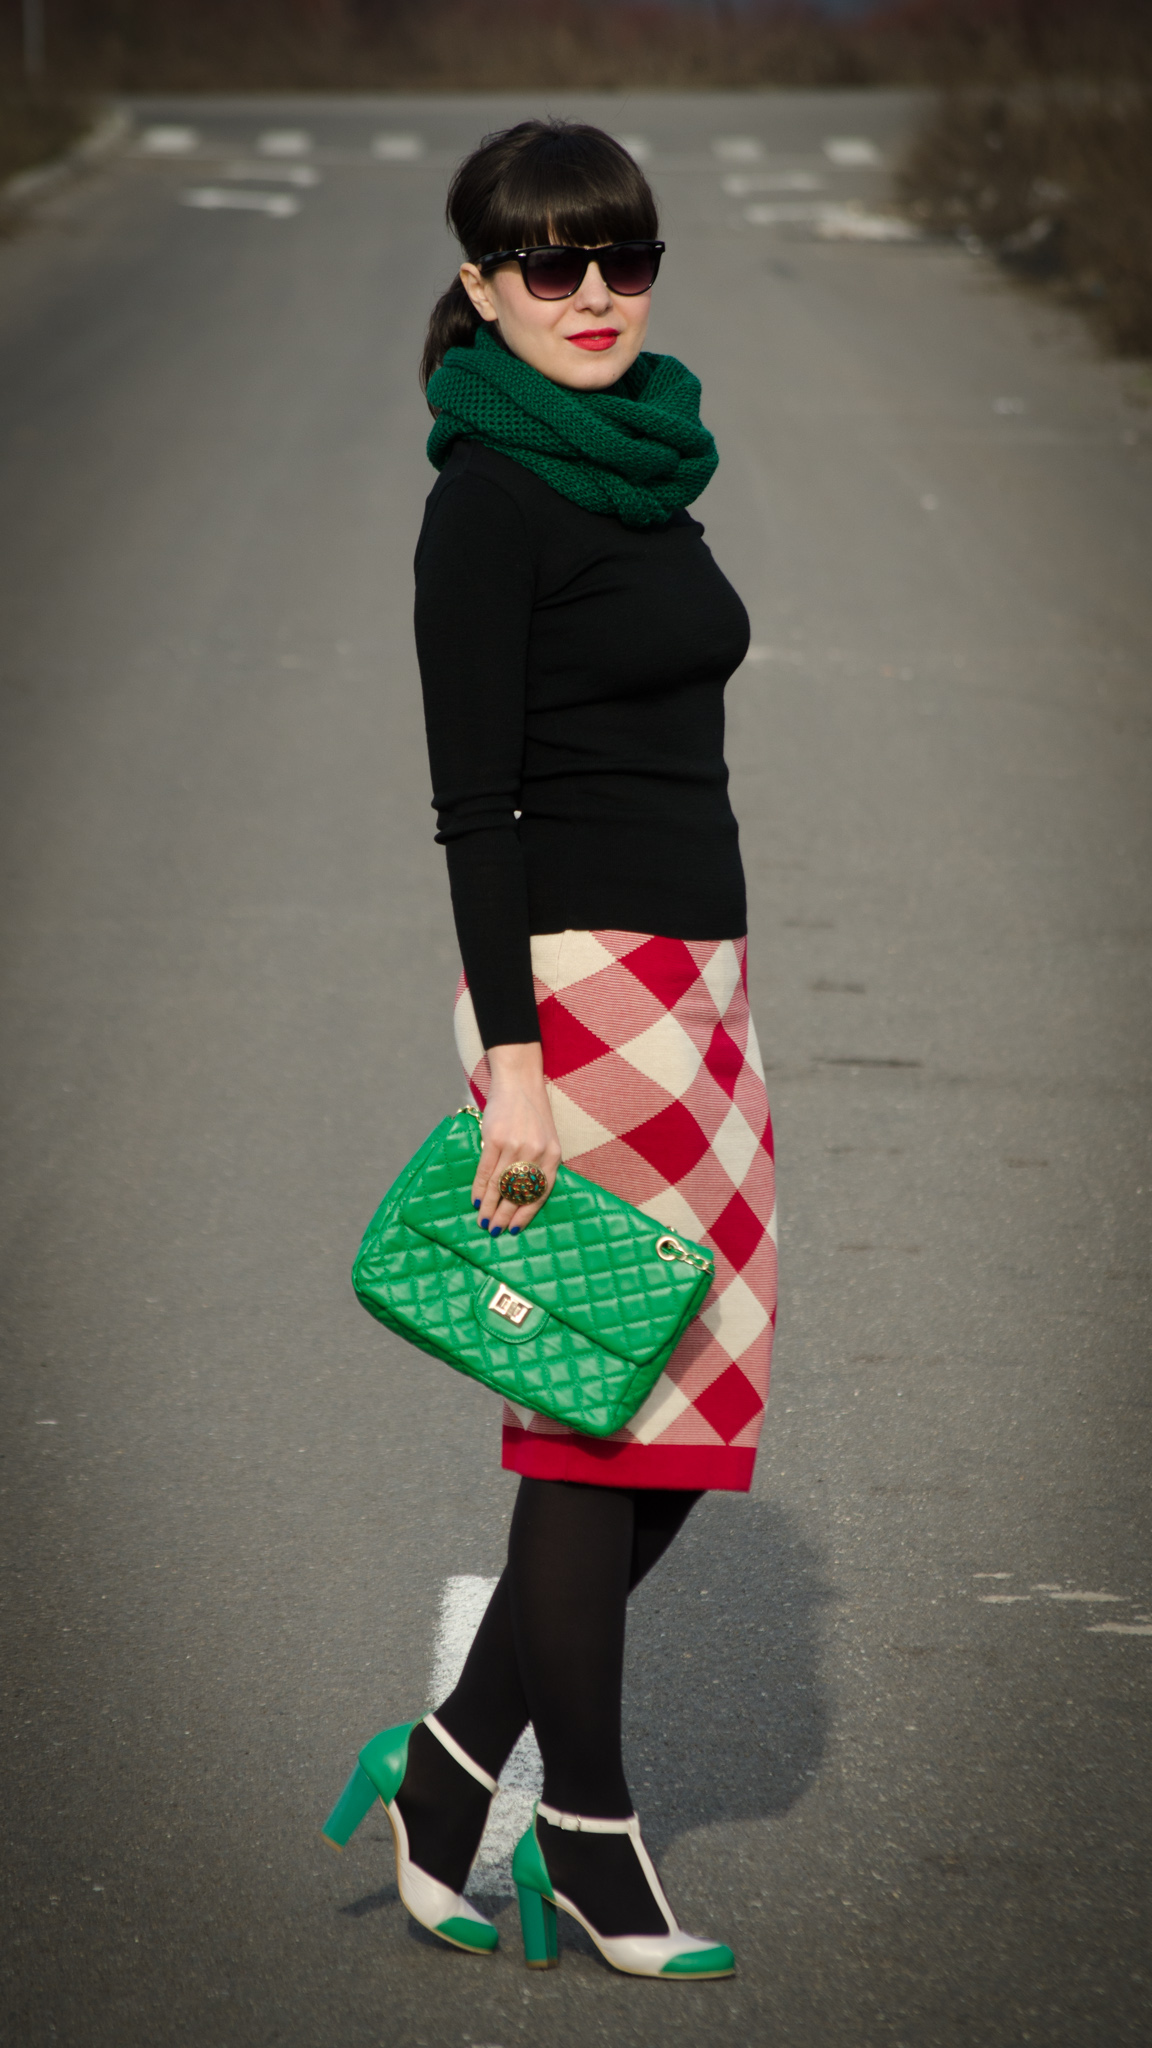 red checkered pencil skirt checkers black turtleneck green scarf bag handbag nude & green high heels tina R koton Christmas look outfit